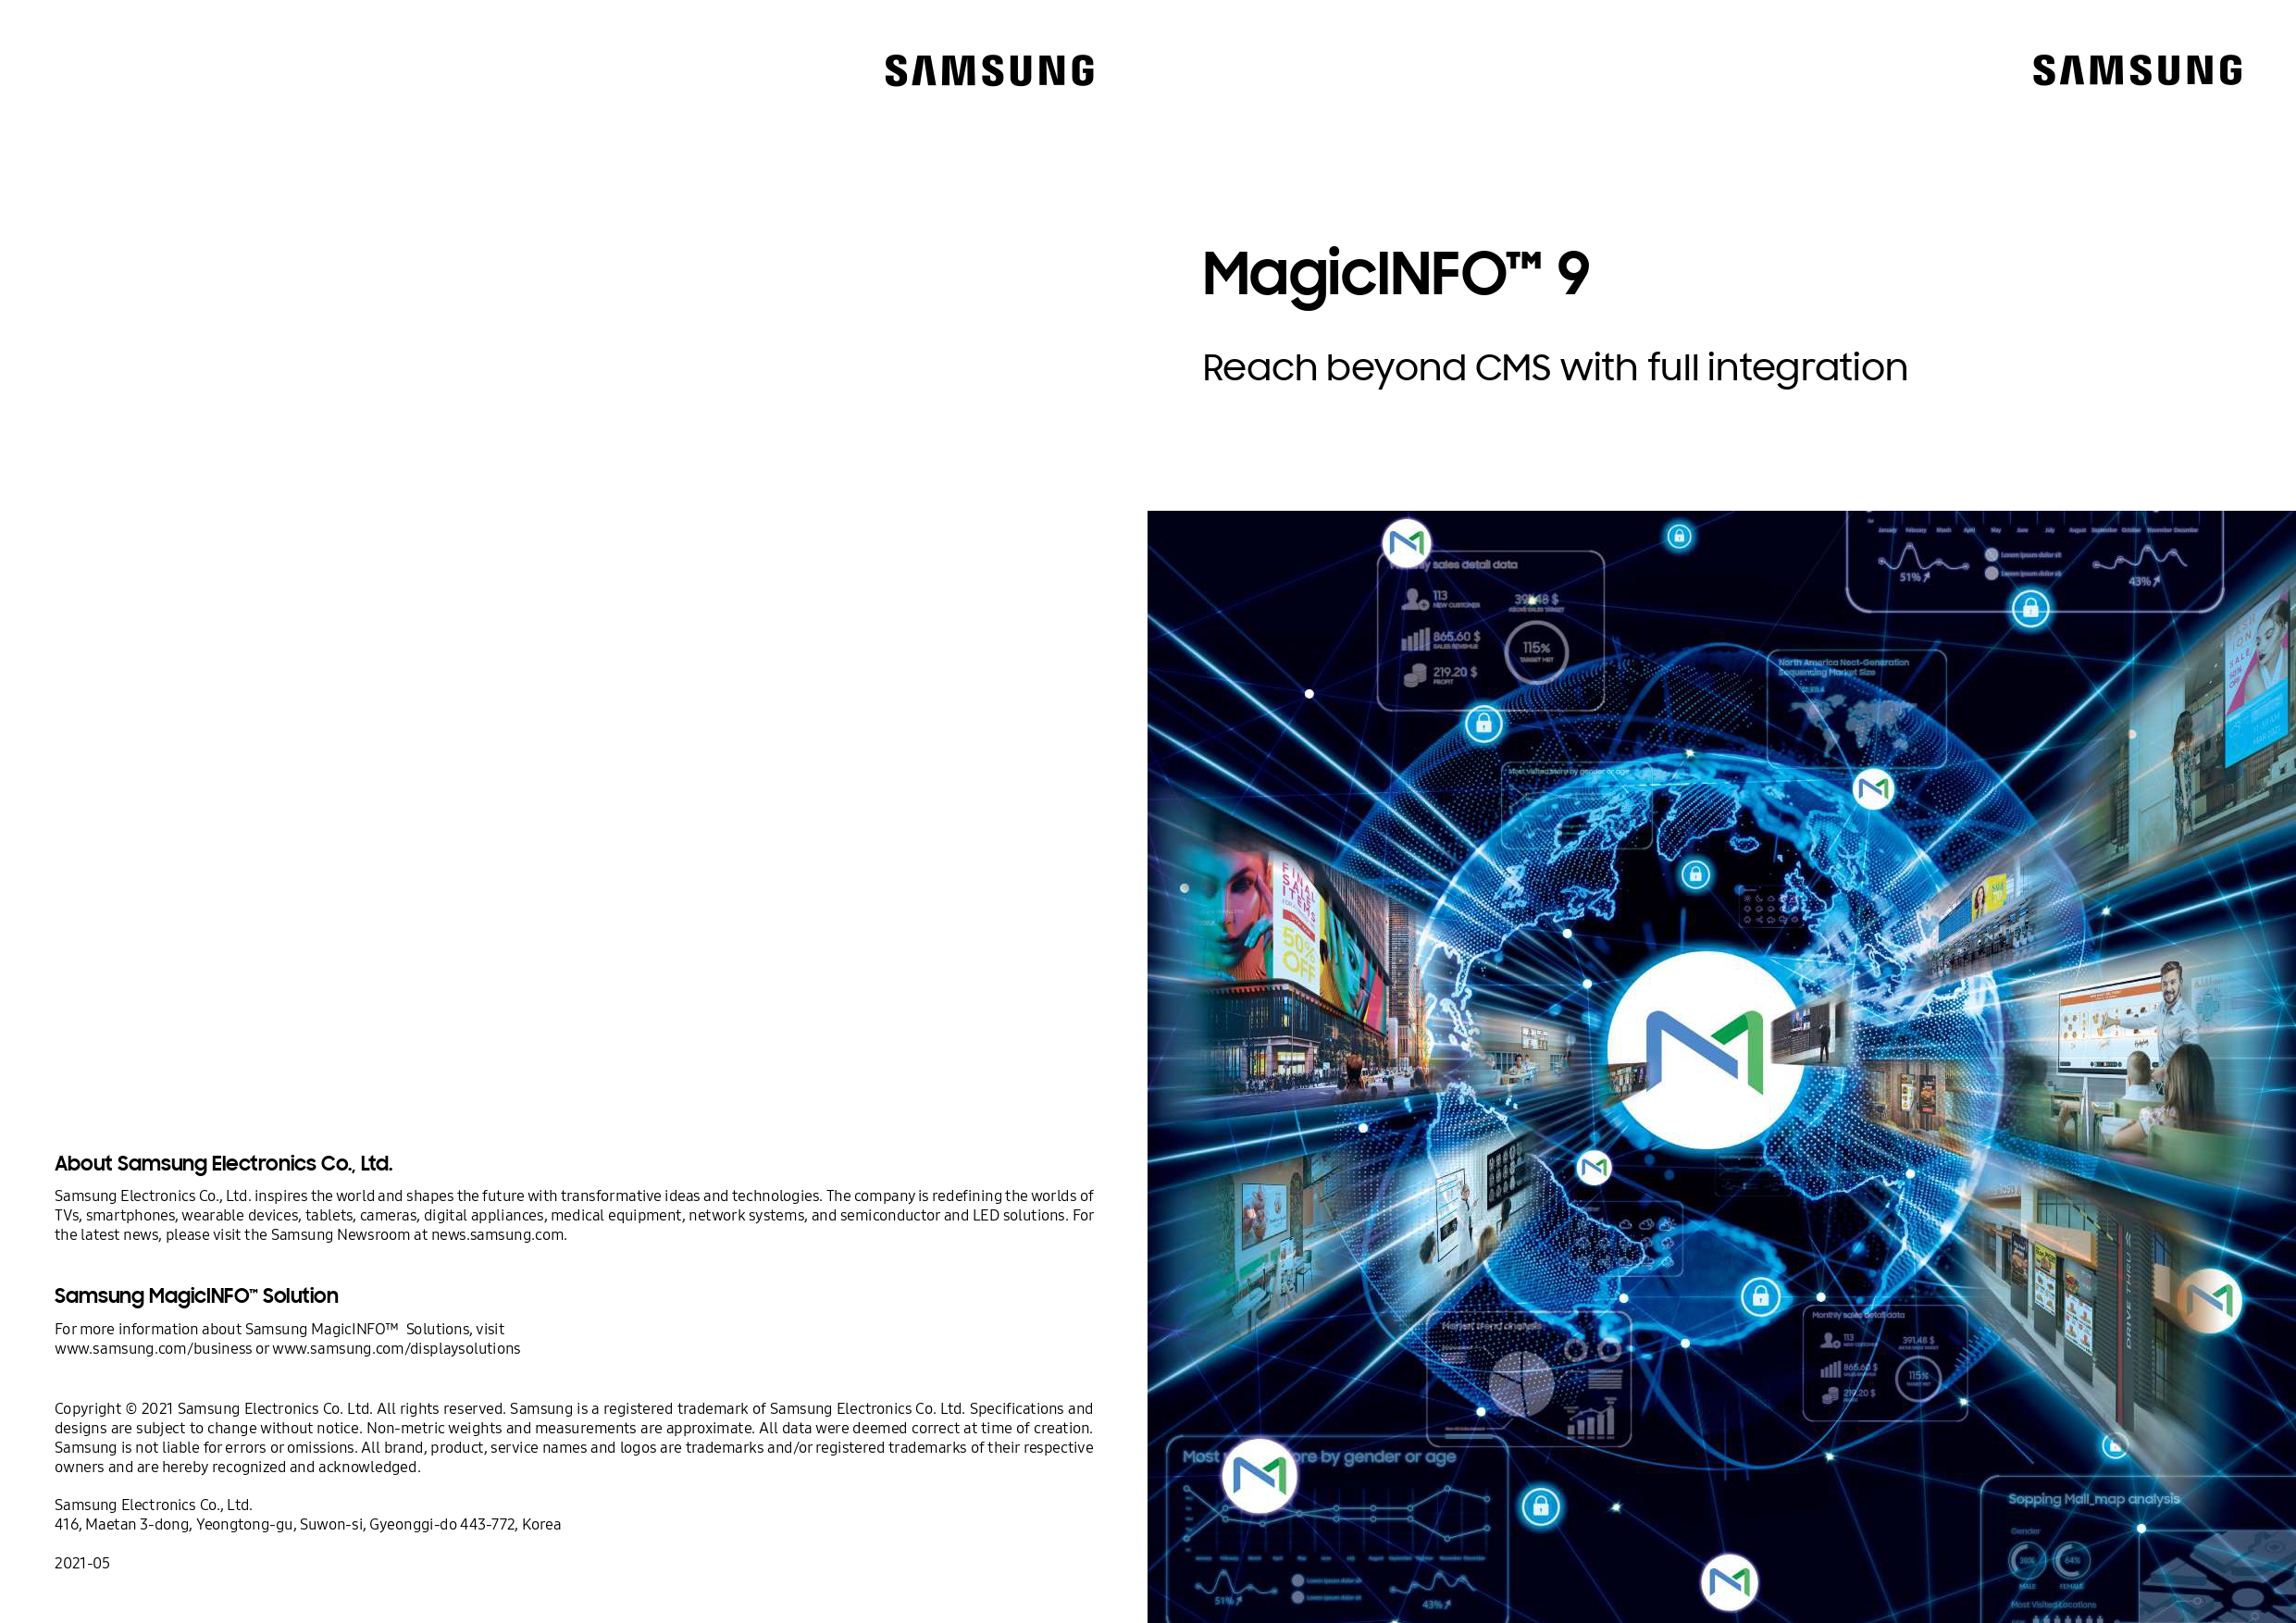 2021_Samsung-MagicINFO9_210521_WEB (1)_page-0001_(1)